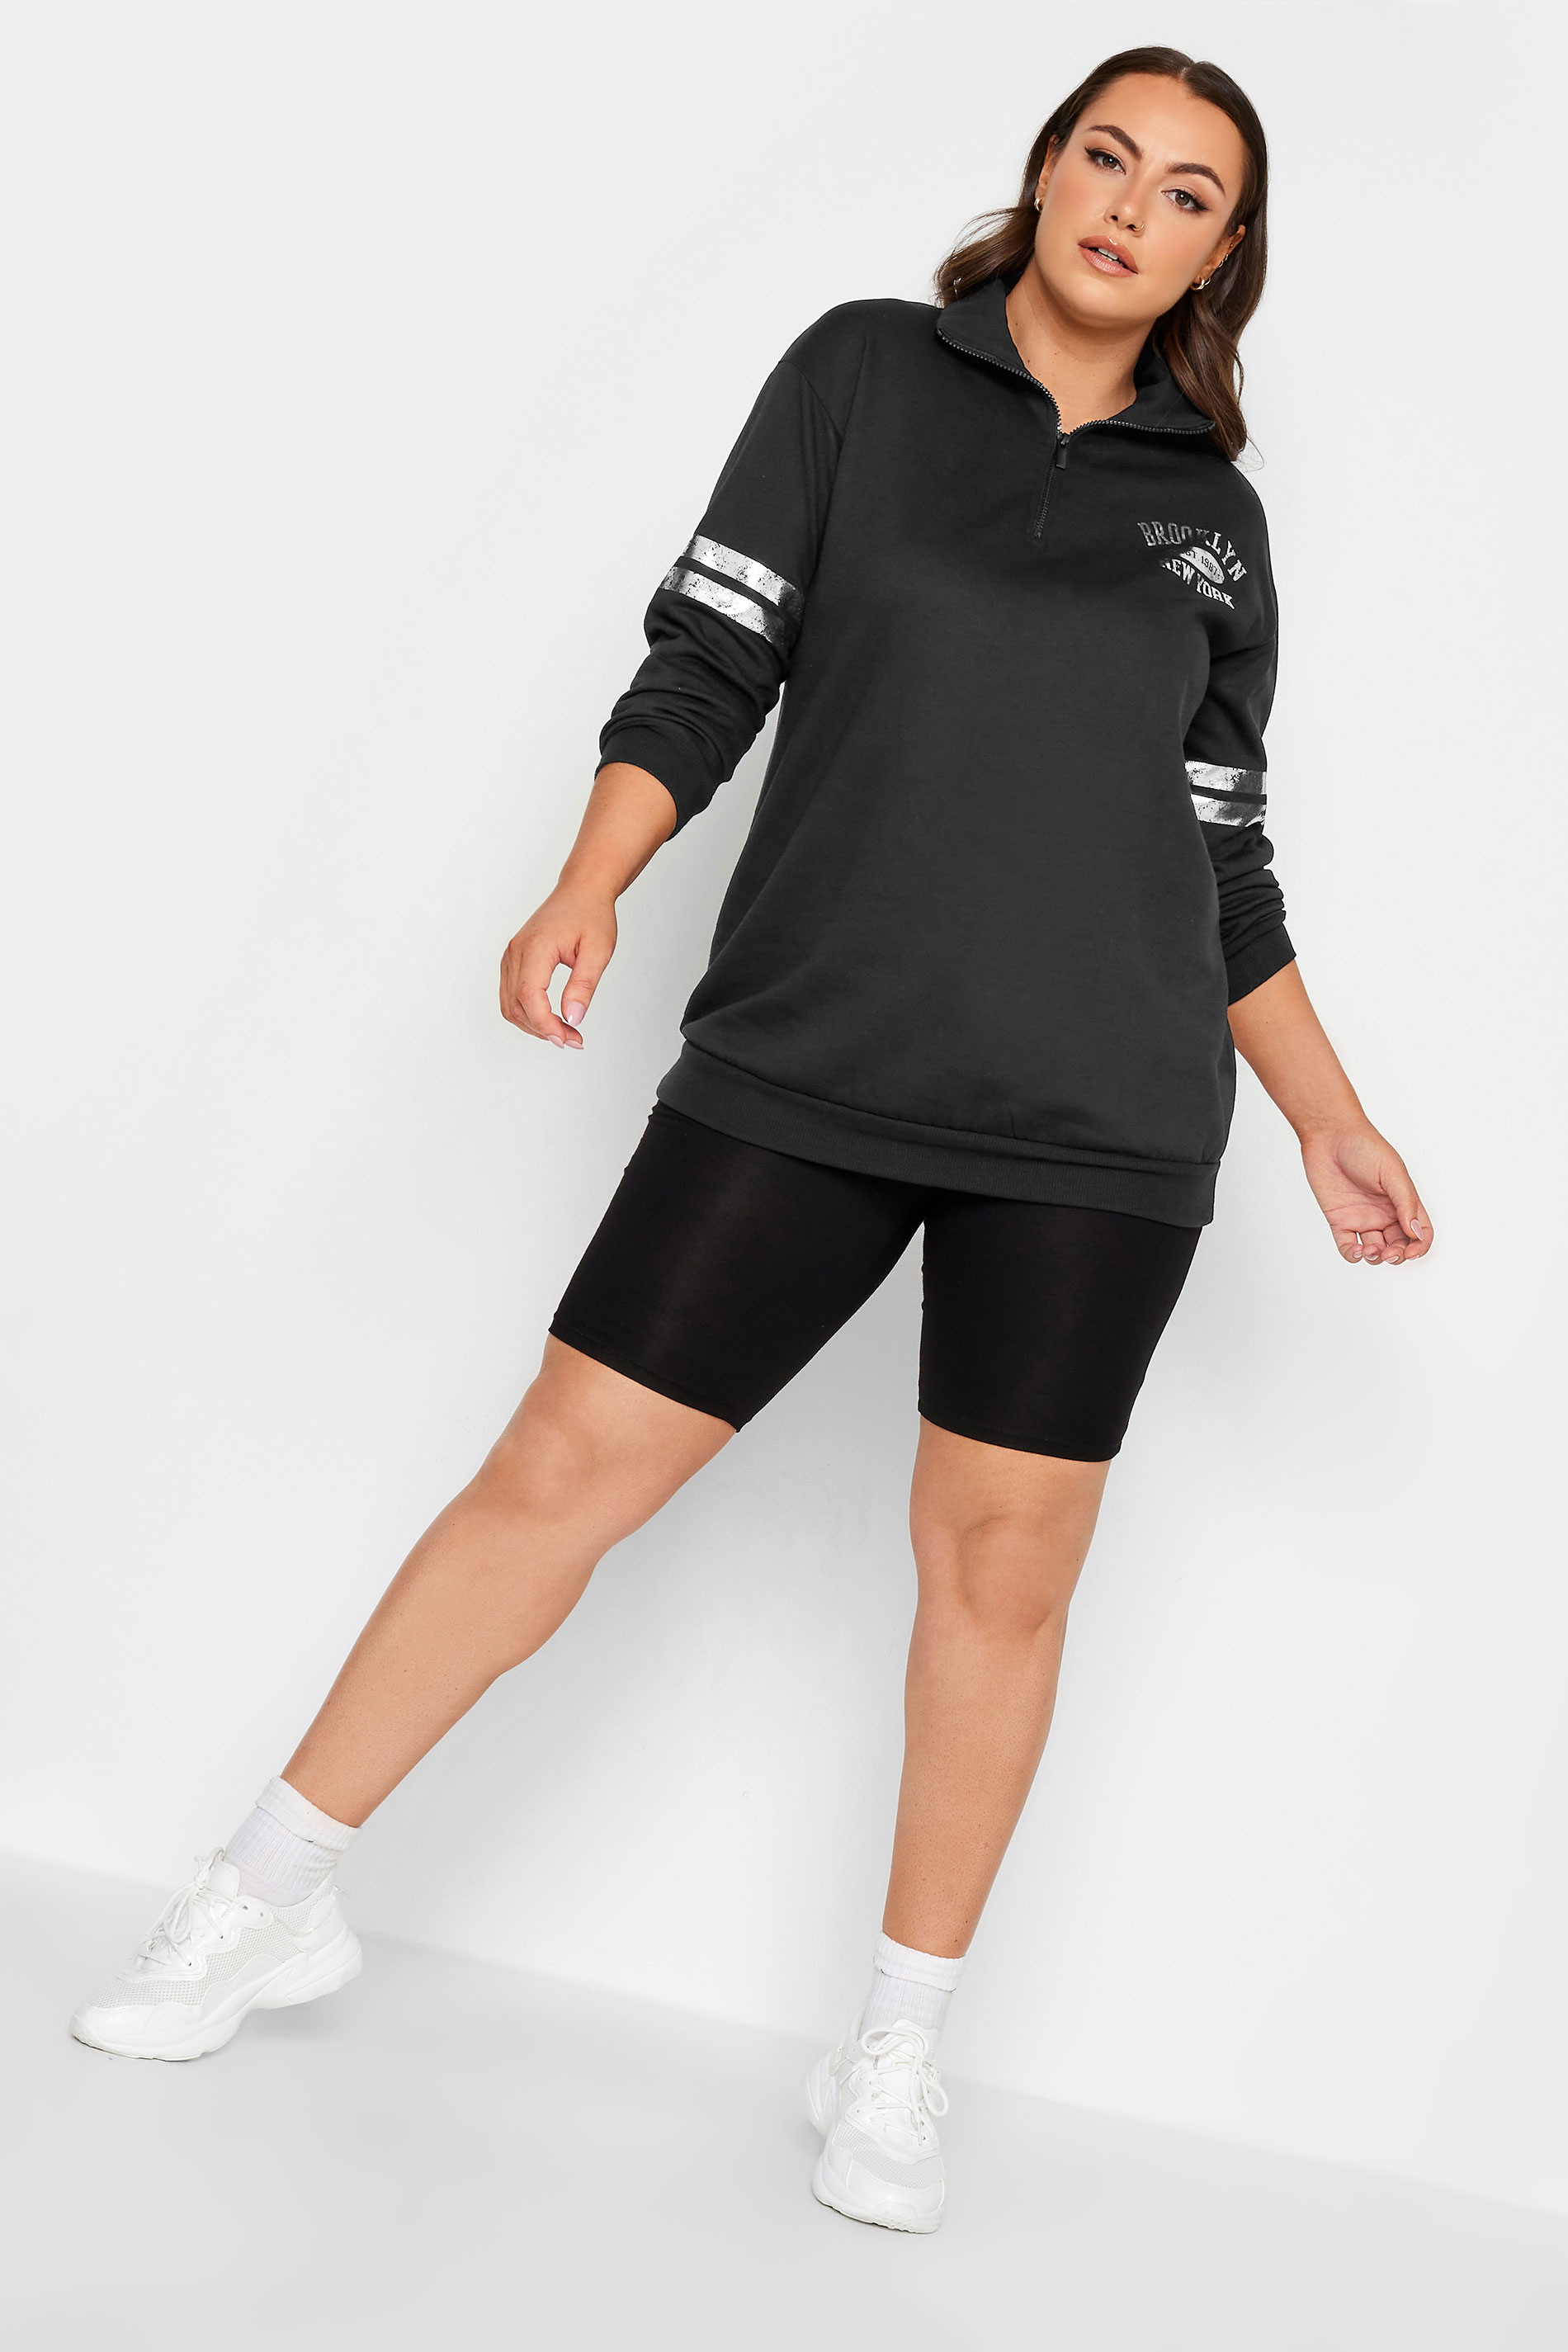 YOURS Plus Size Black 'Brooklyn' Varsity Half Zip Sweatshirt | Yours Clothing 2